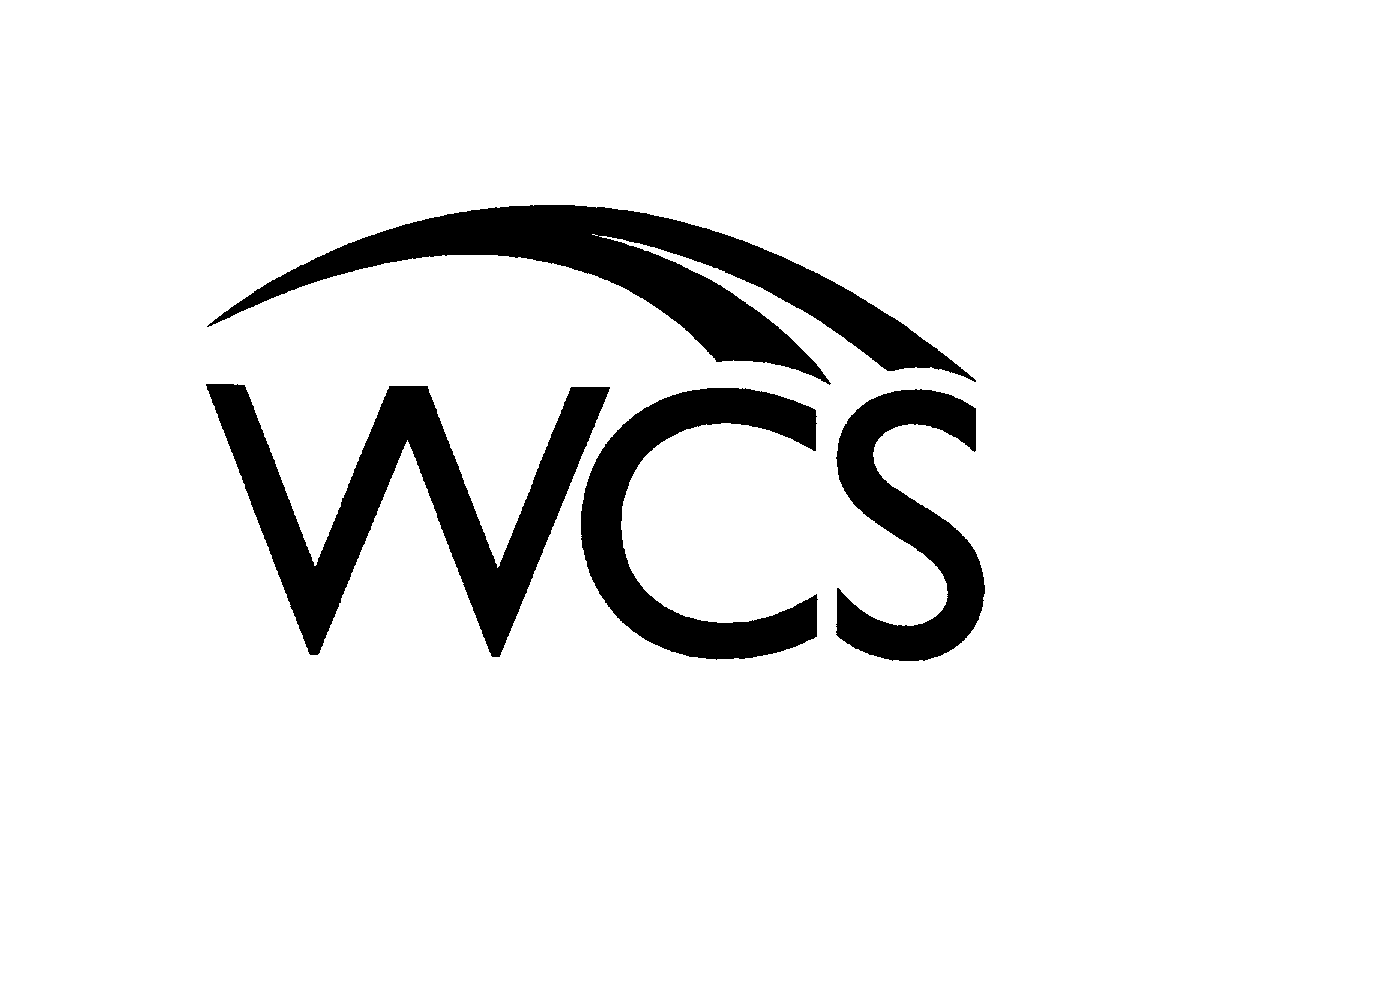 WCS - Vermont Information Processing, Inc. Trademark Registration